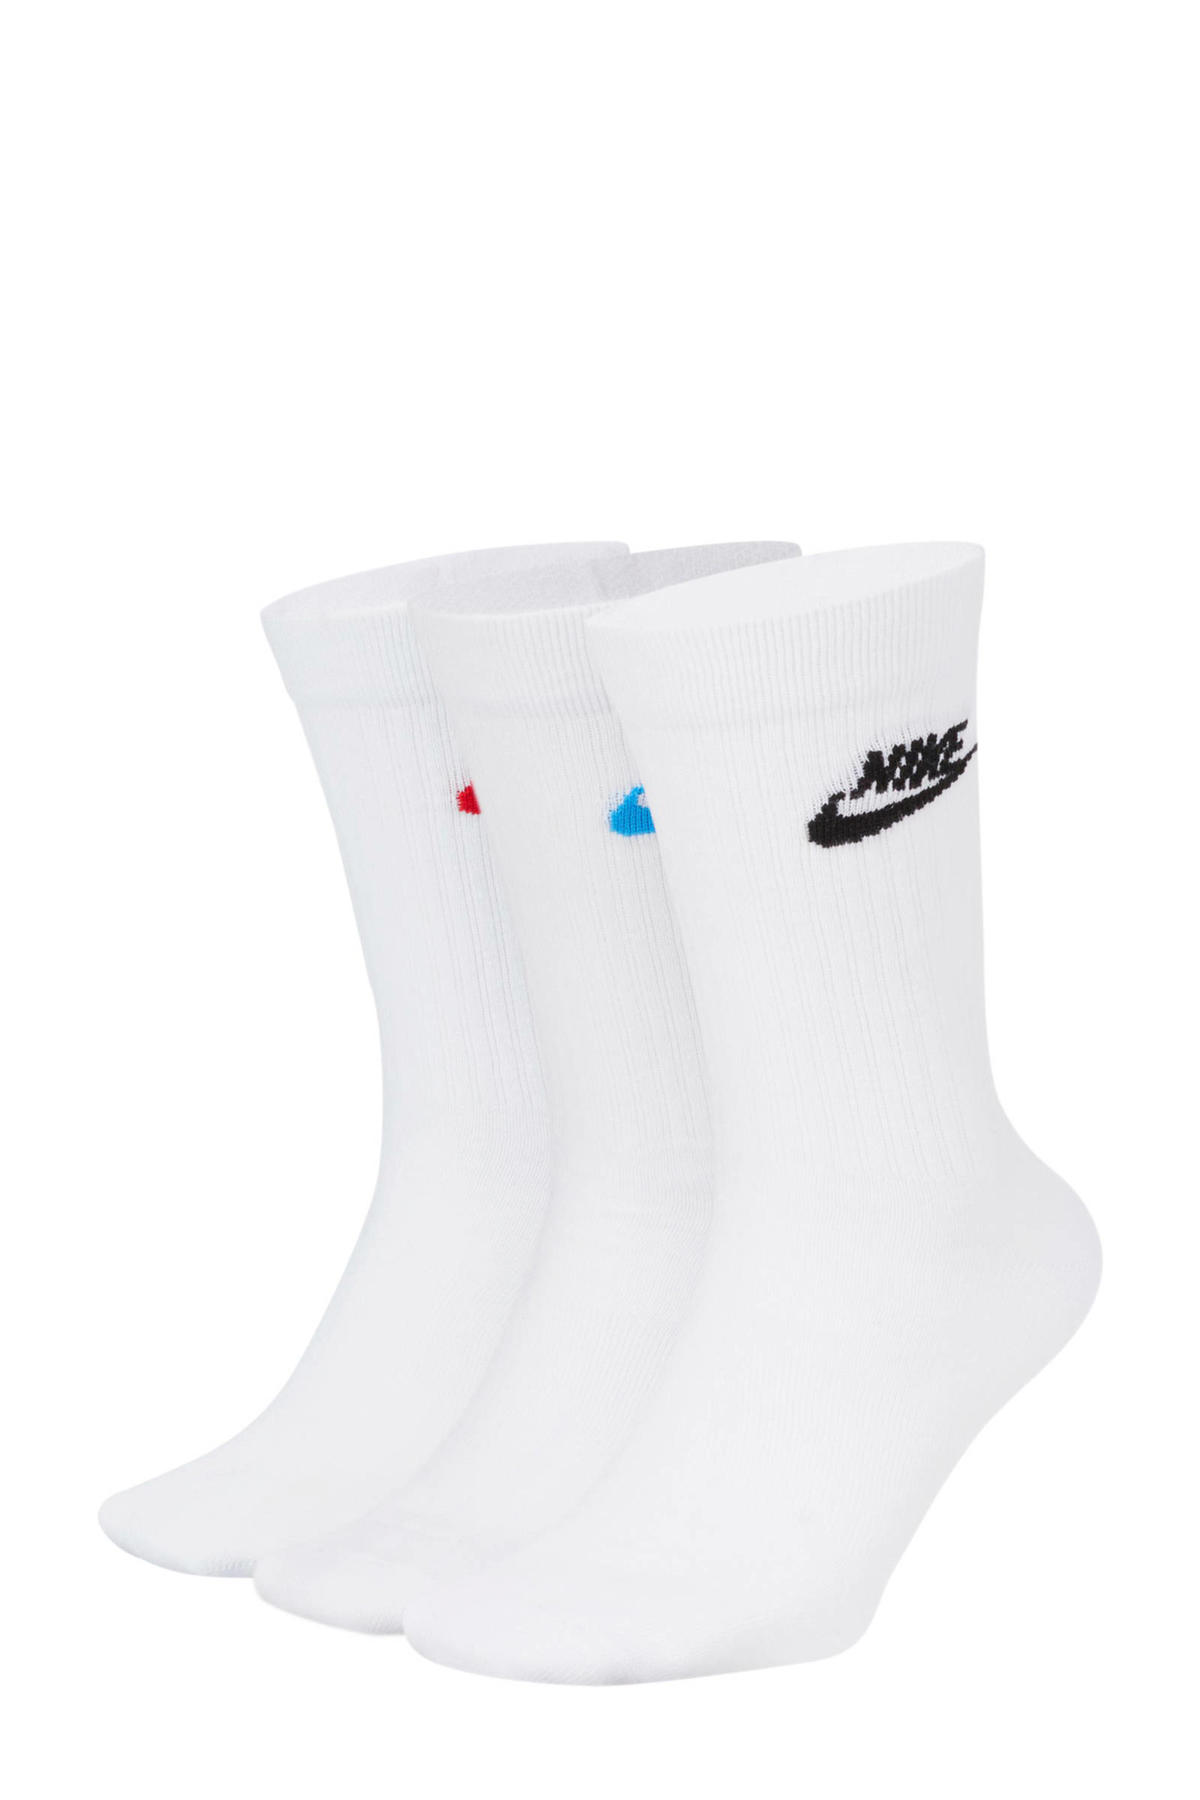 Nike sokken Everyday - set 3 wit wehkamp